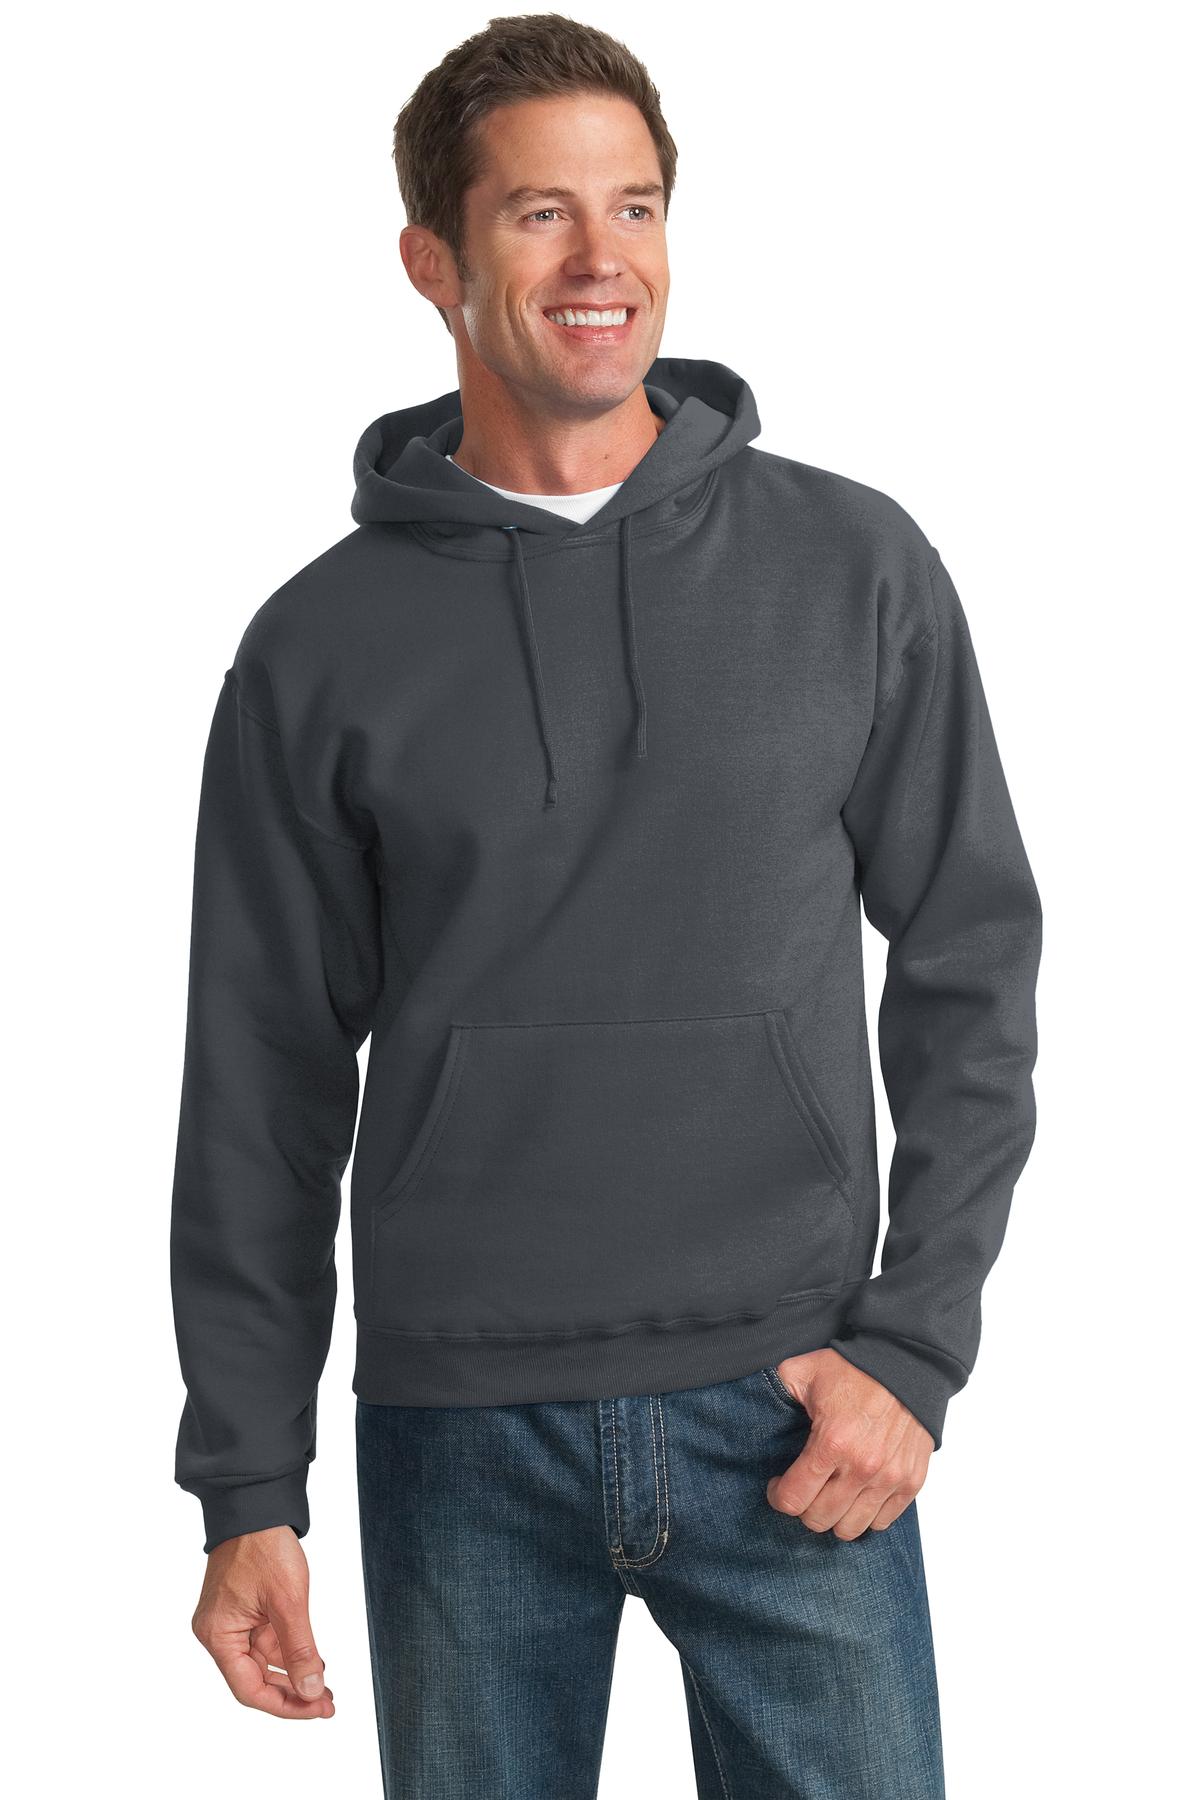 JERZEES® - NuBlend® Pullover Hooded Sweatshirt. 996M [Charcoal Grey] - DFW Impression